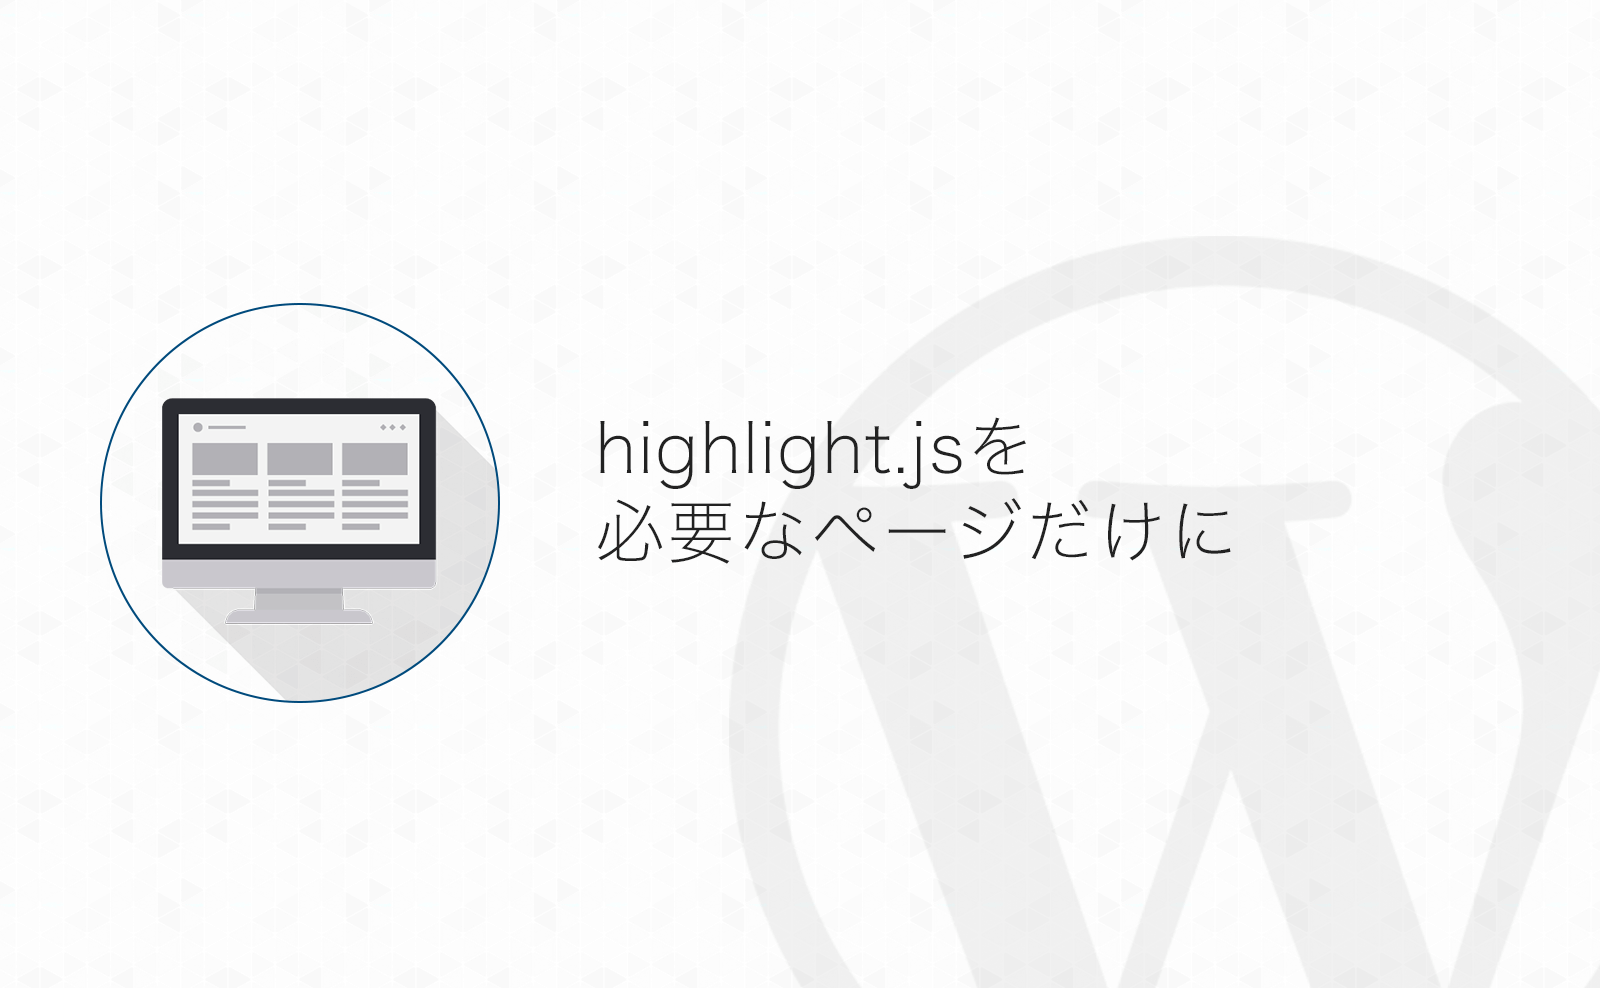 【WordPress】highlight.jsを必要なページだけ読み込ませる方法